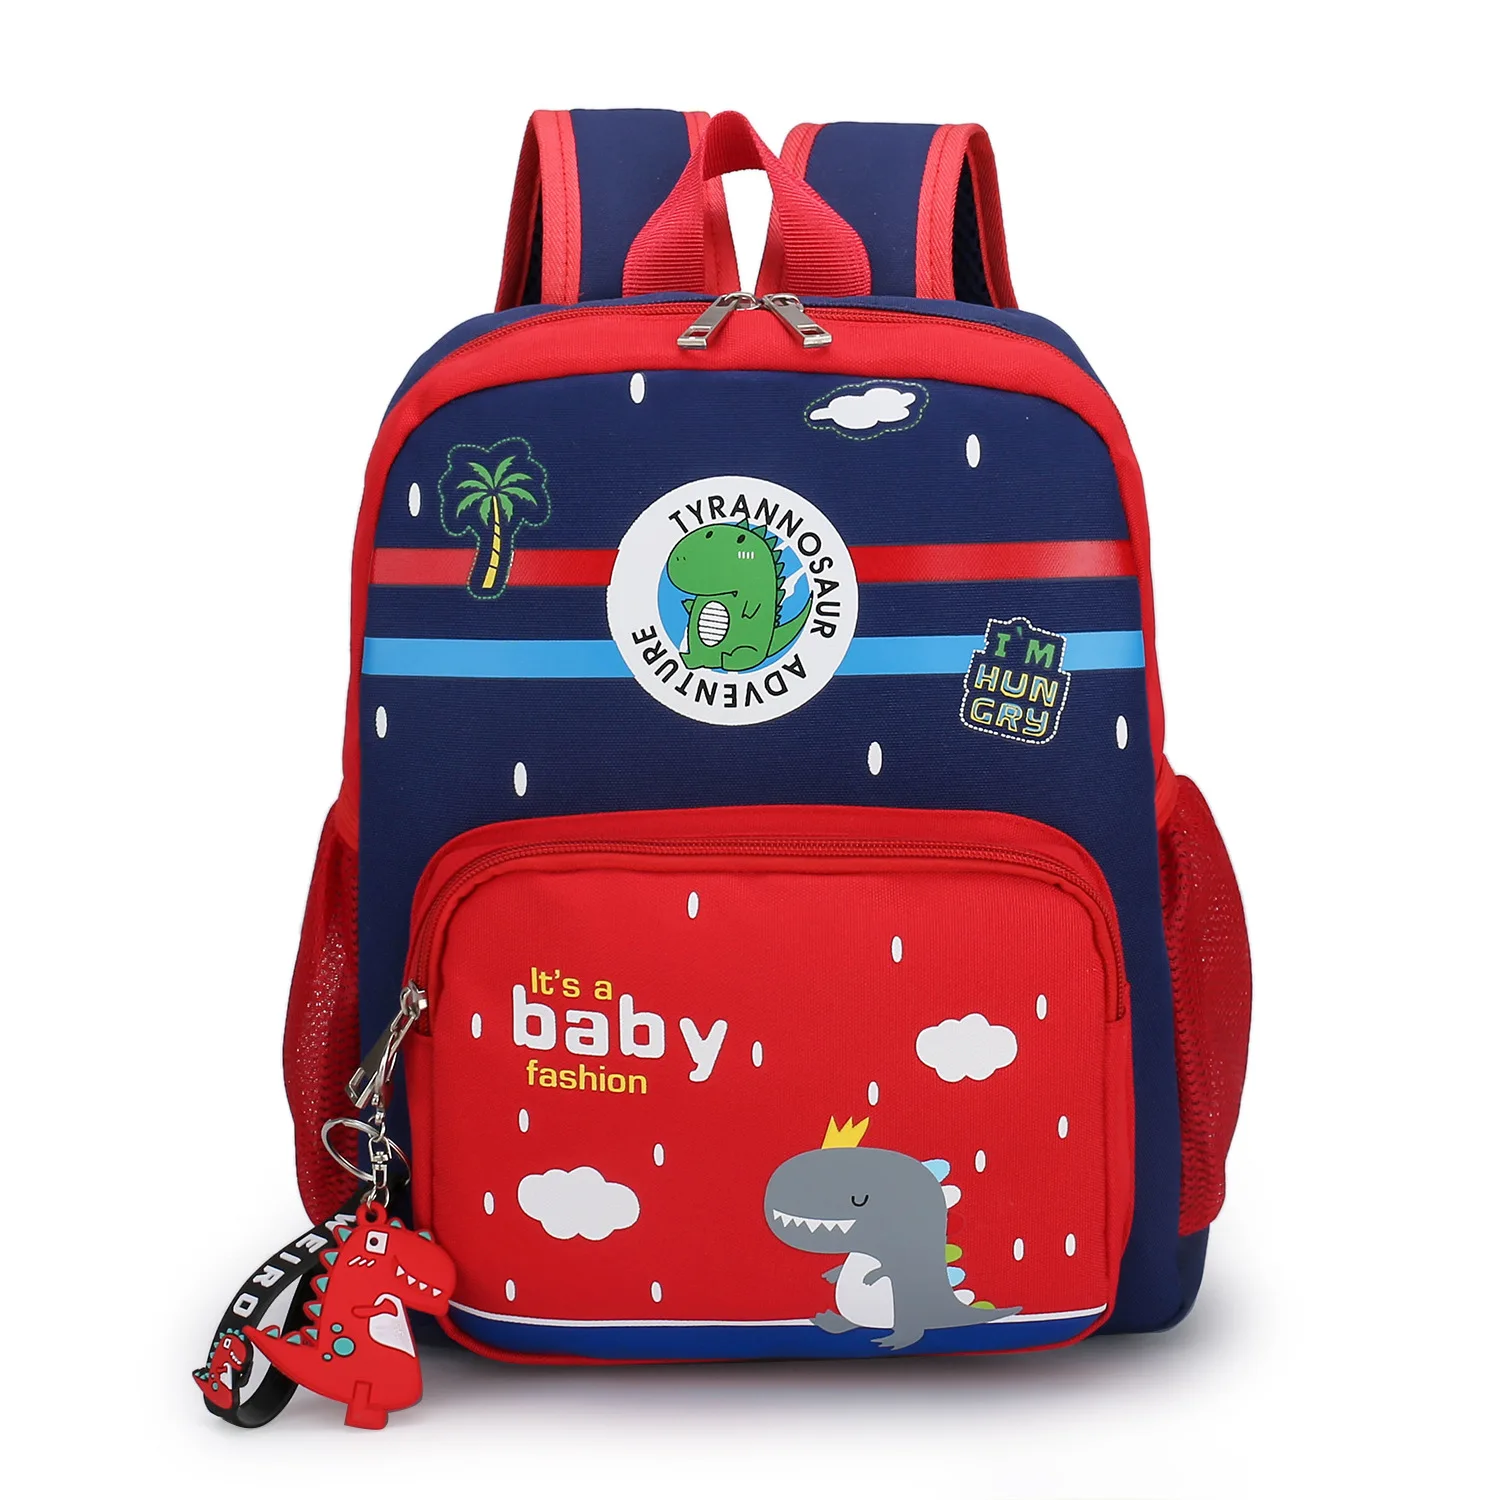 

wholesale custom oxford cheaper cute Child kid school bag for Kindergarten or Elementary school, Many colors